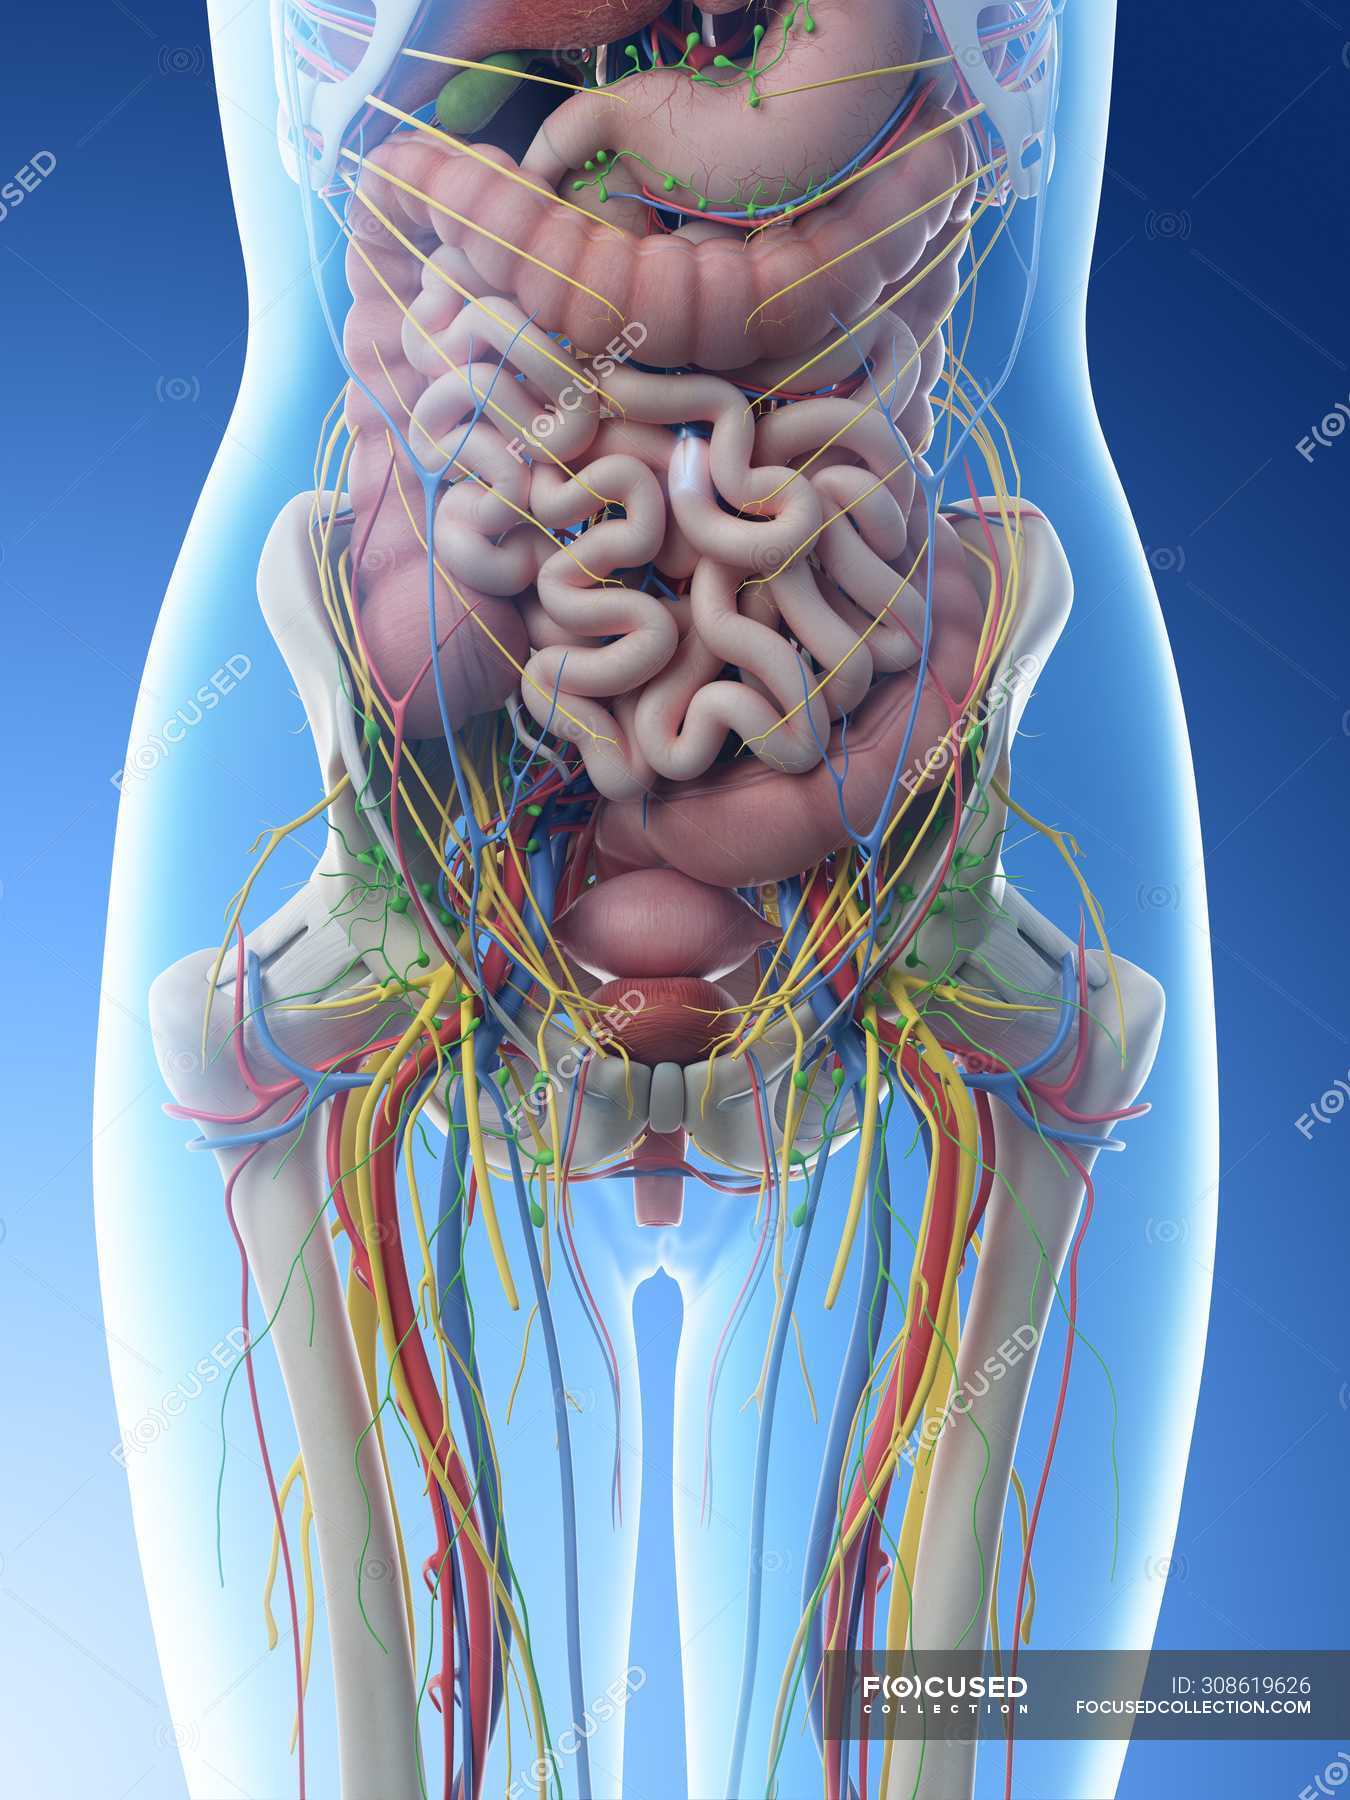 Abdomen Anatomy-Female : Abdominal Organs Real View Female Anatomy